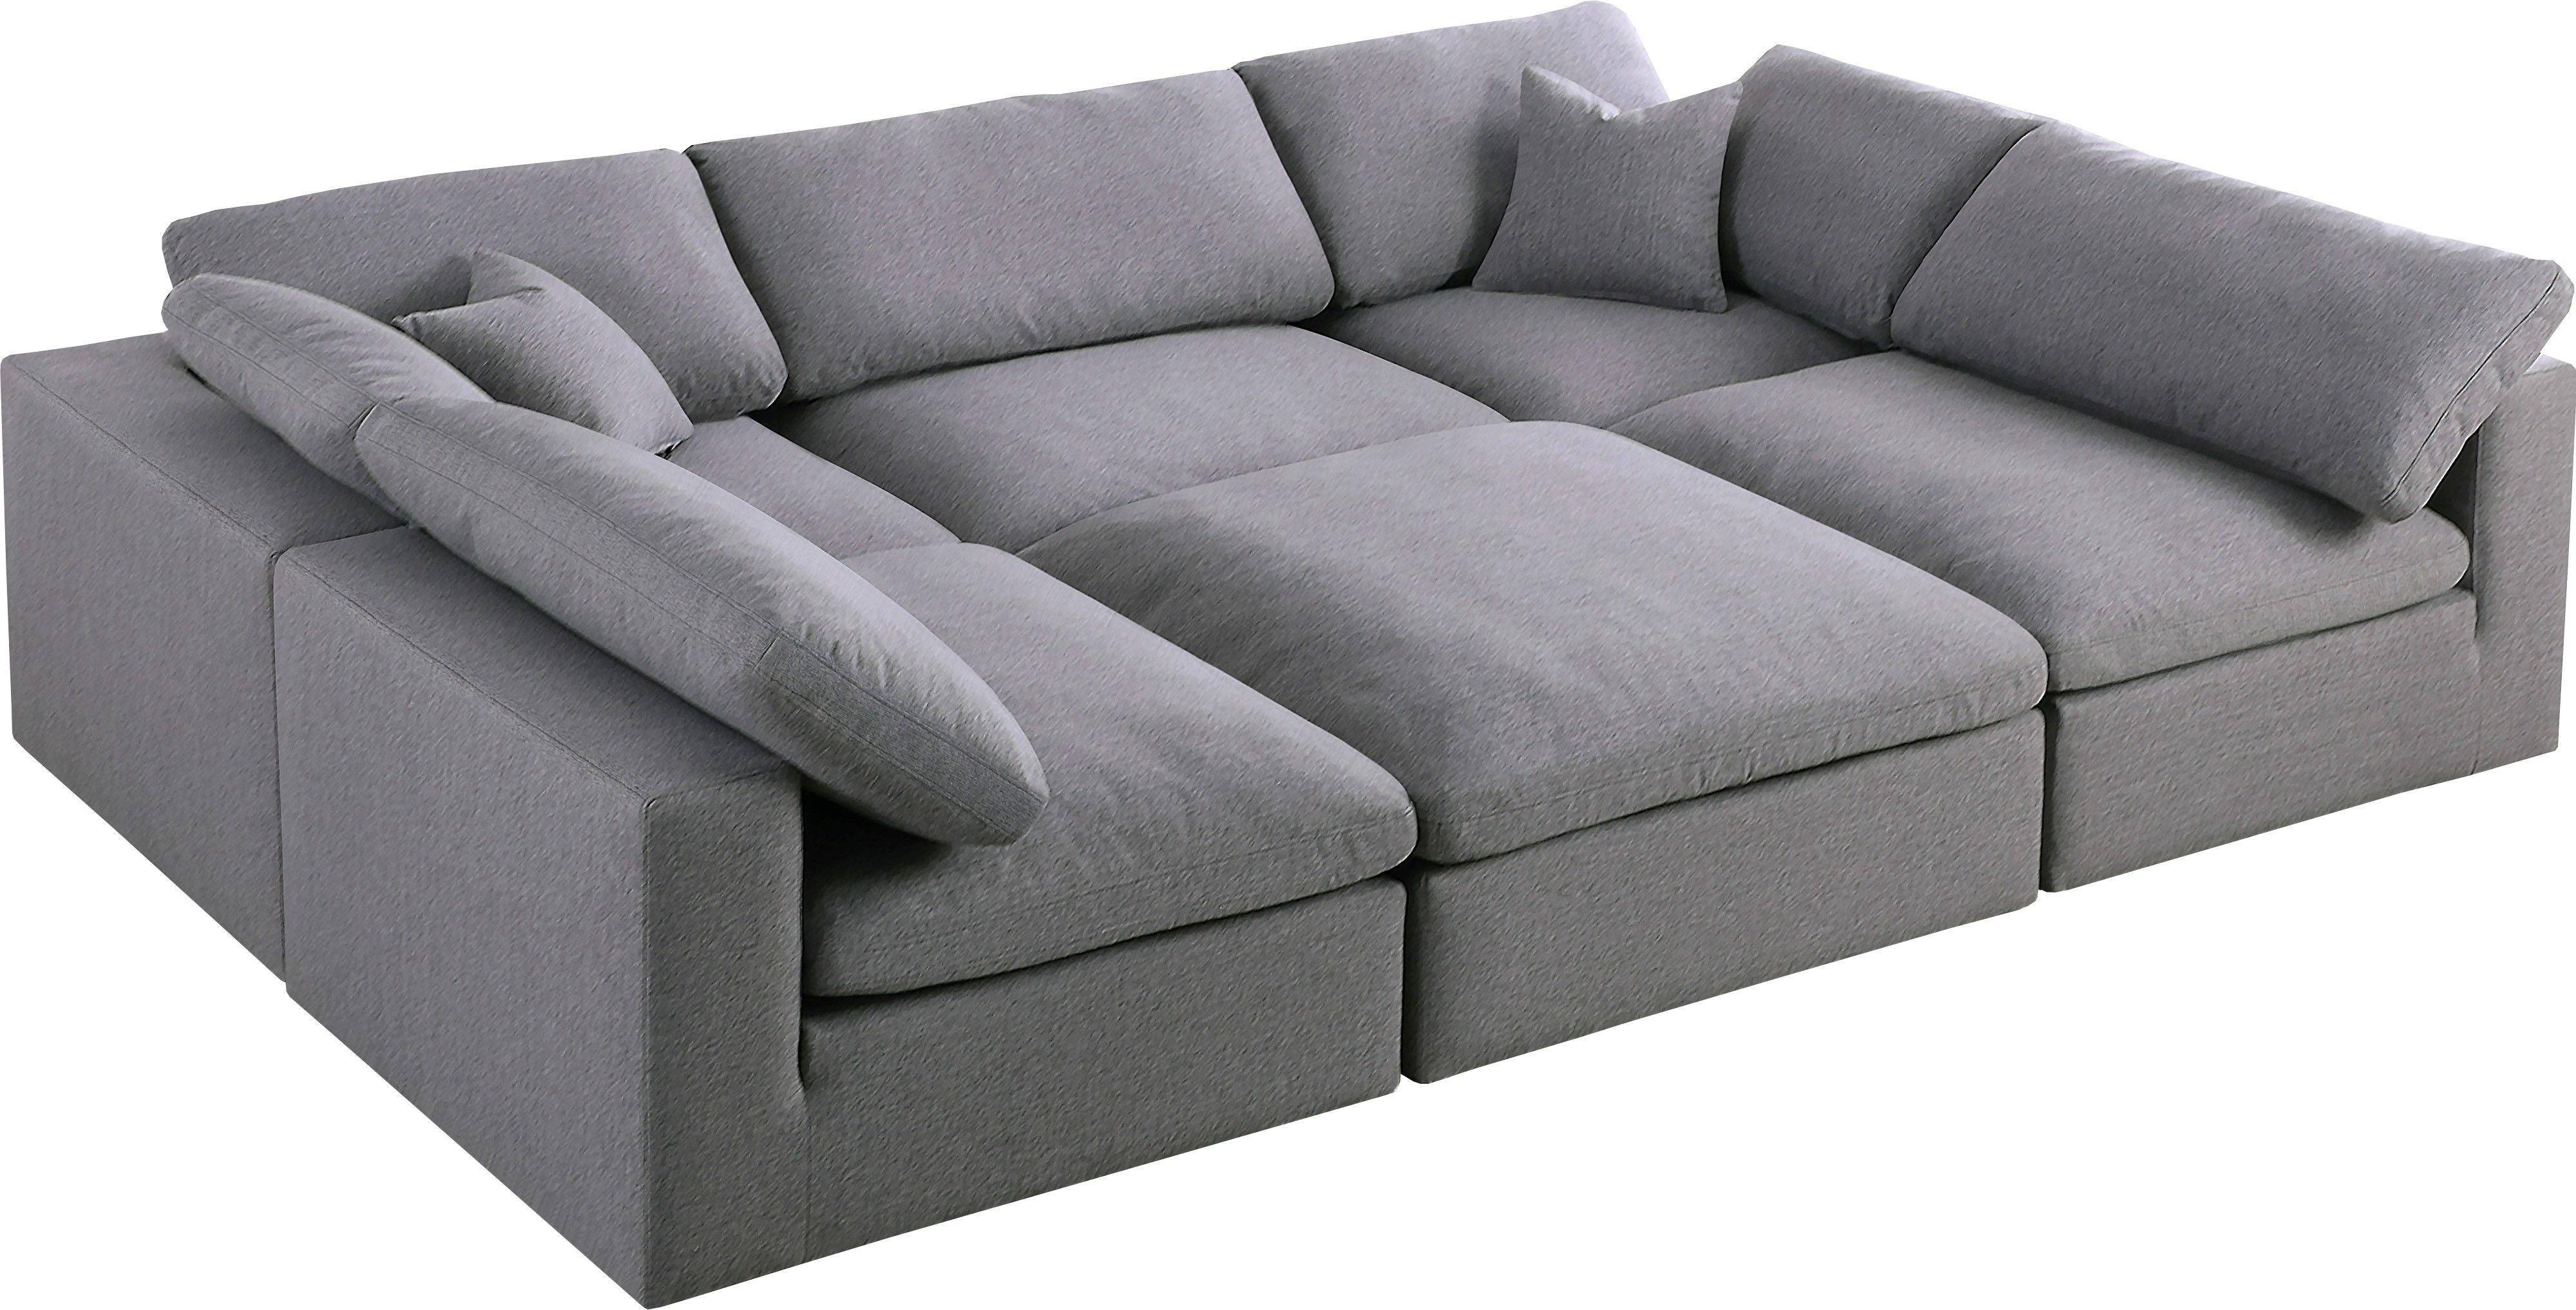 Meridian Furniture - Serene - Linen Textured Fabric Deluxe Comfort Modular Sectional - Grey - 5th Avenue Furniture